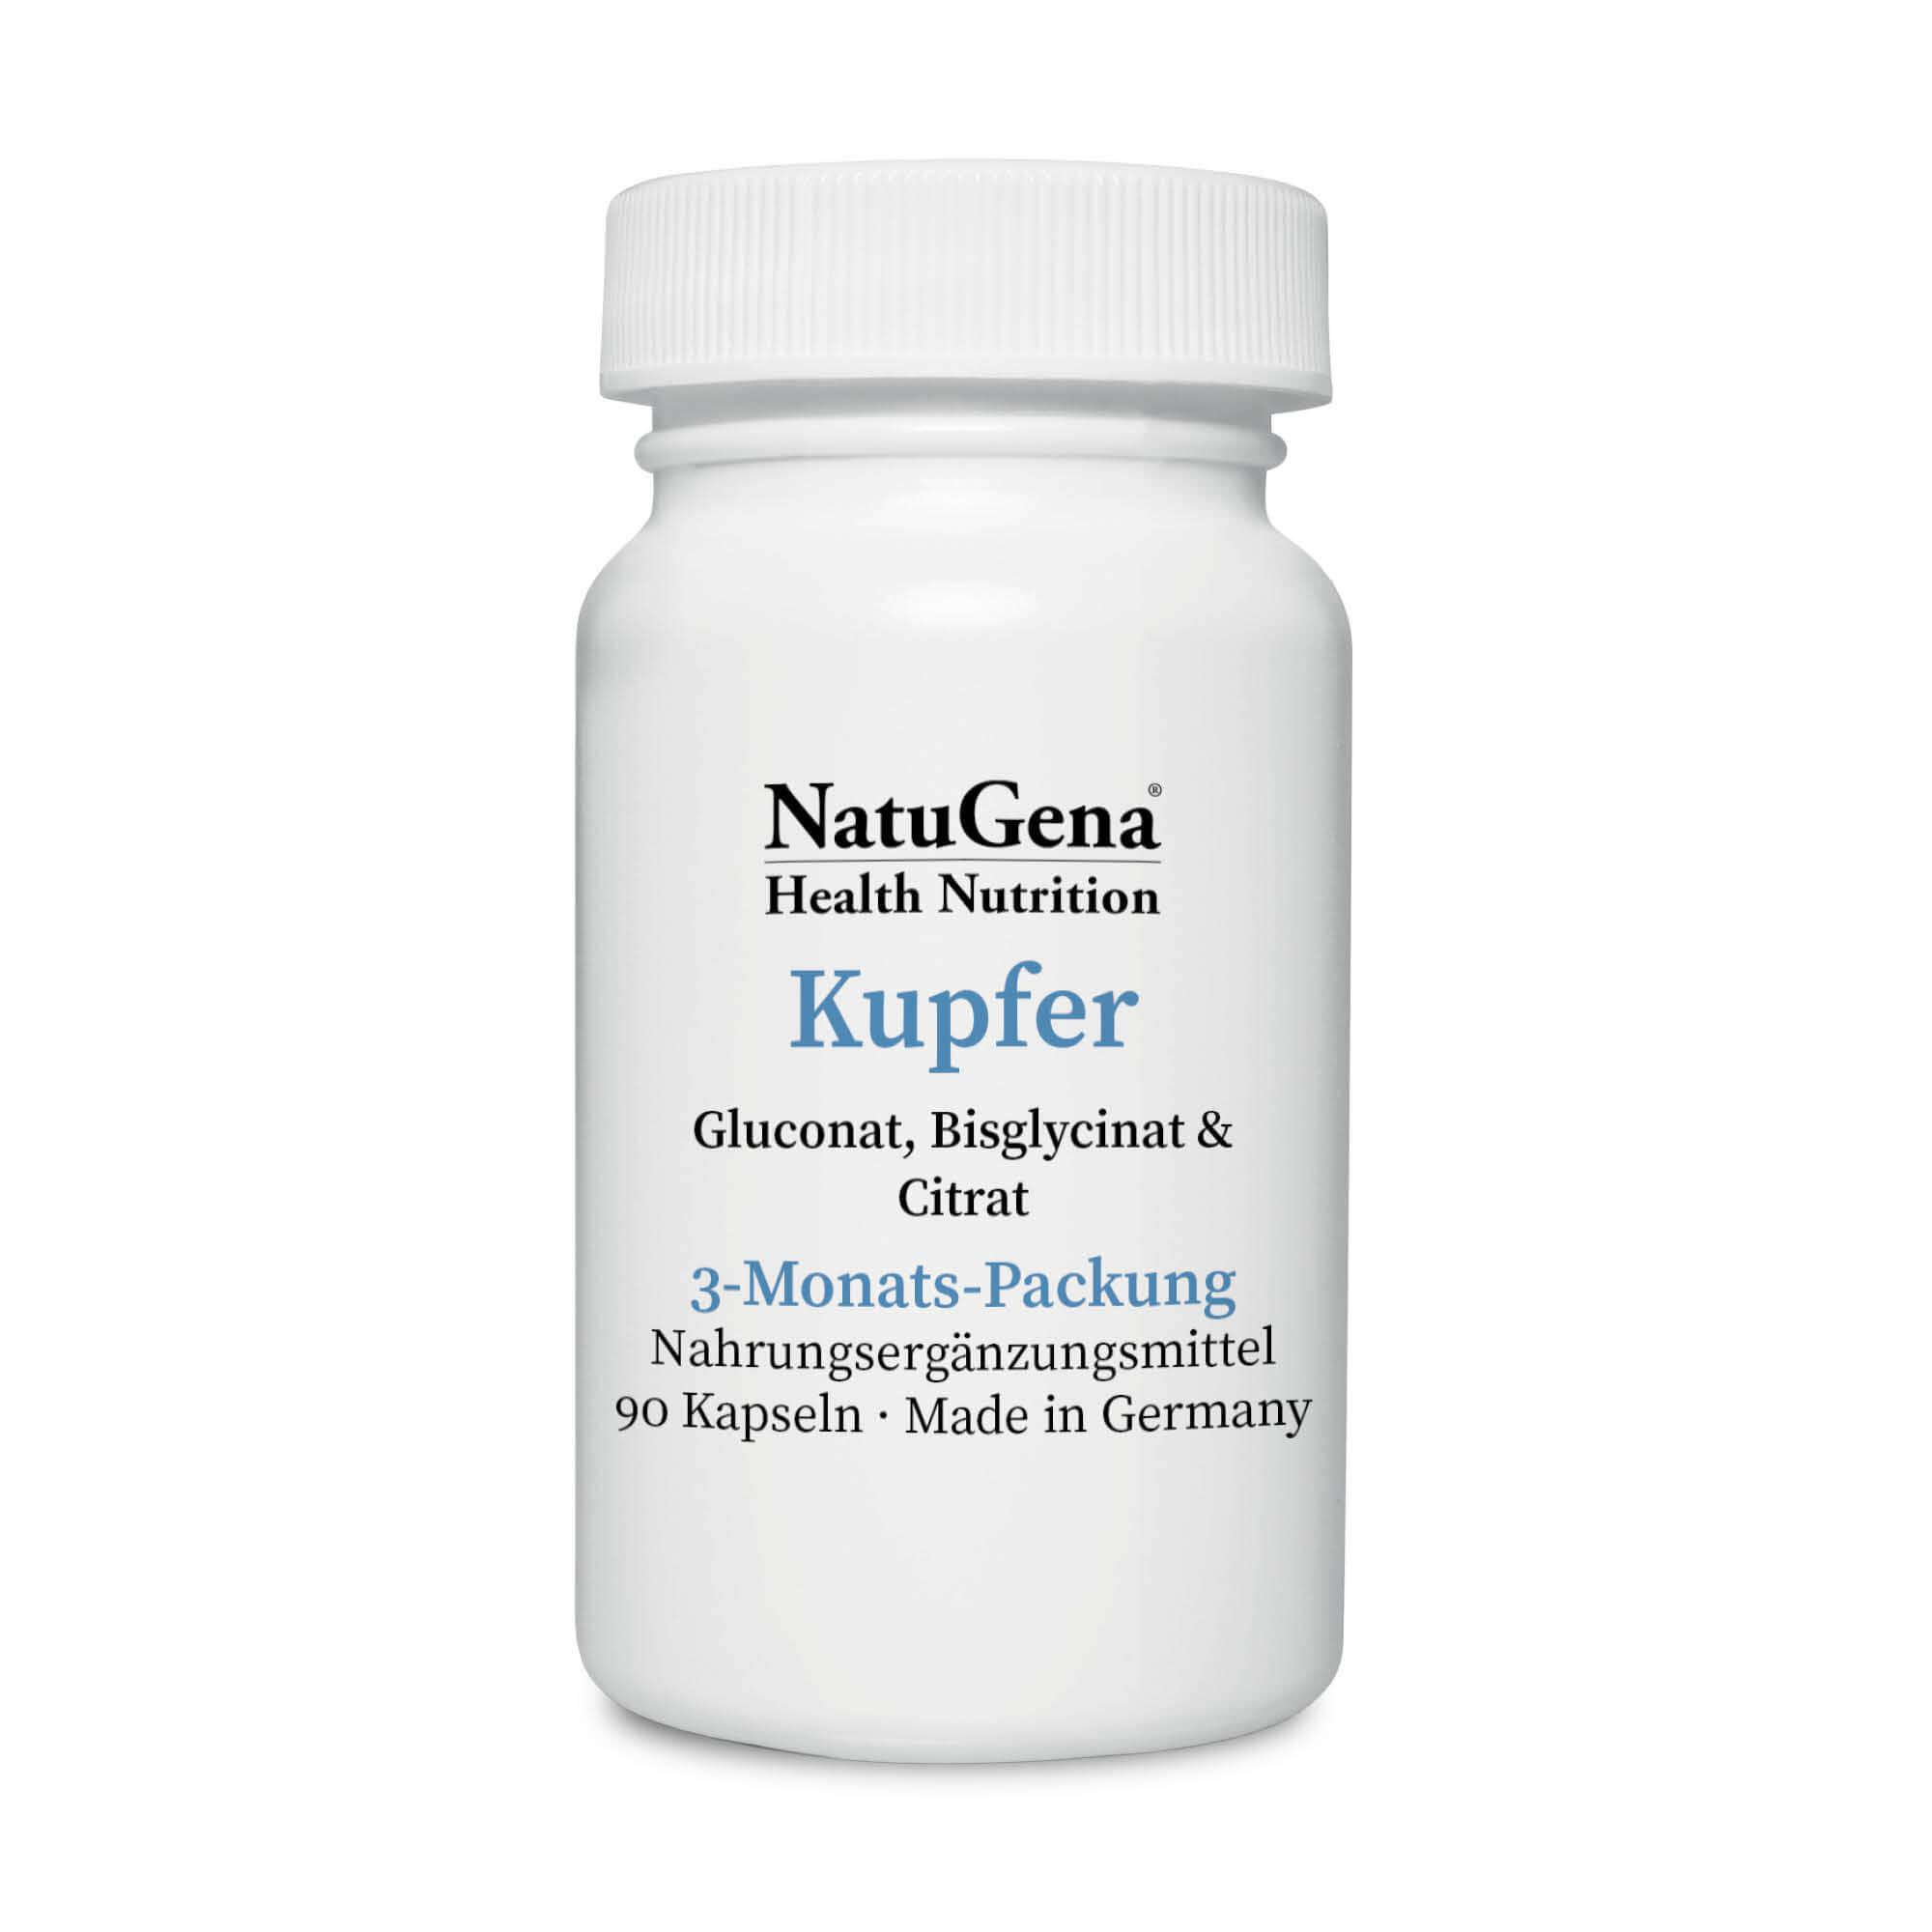 NatuGena Kupfer | 90 Kapseln | Gluconat, Bisglycinat & Citrat